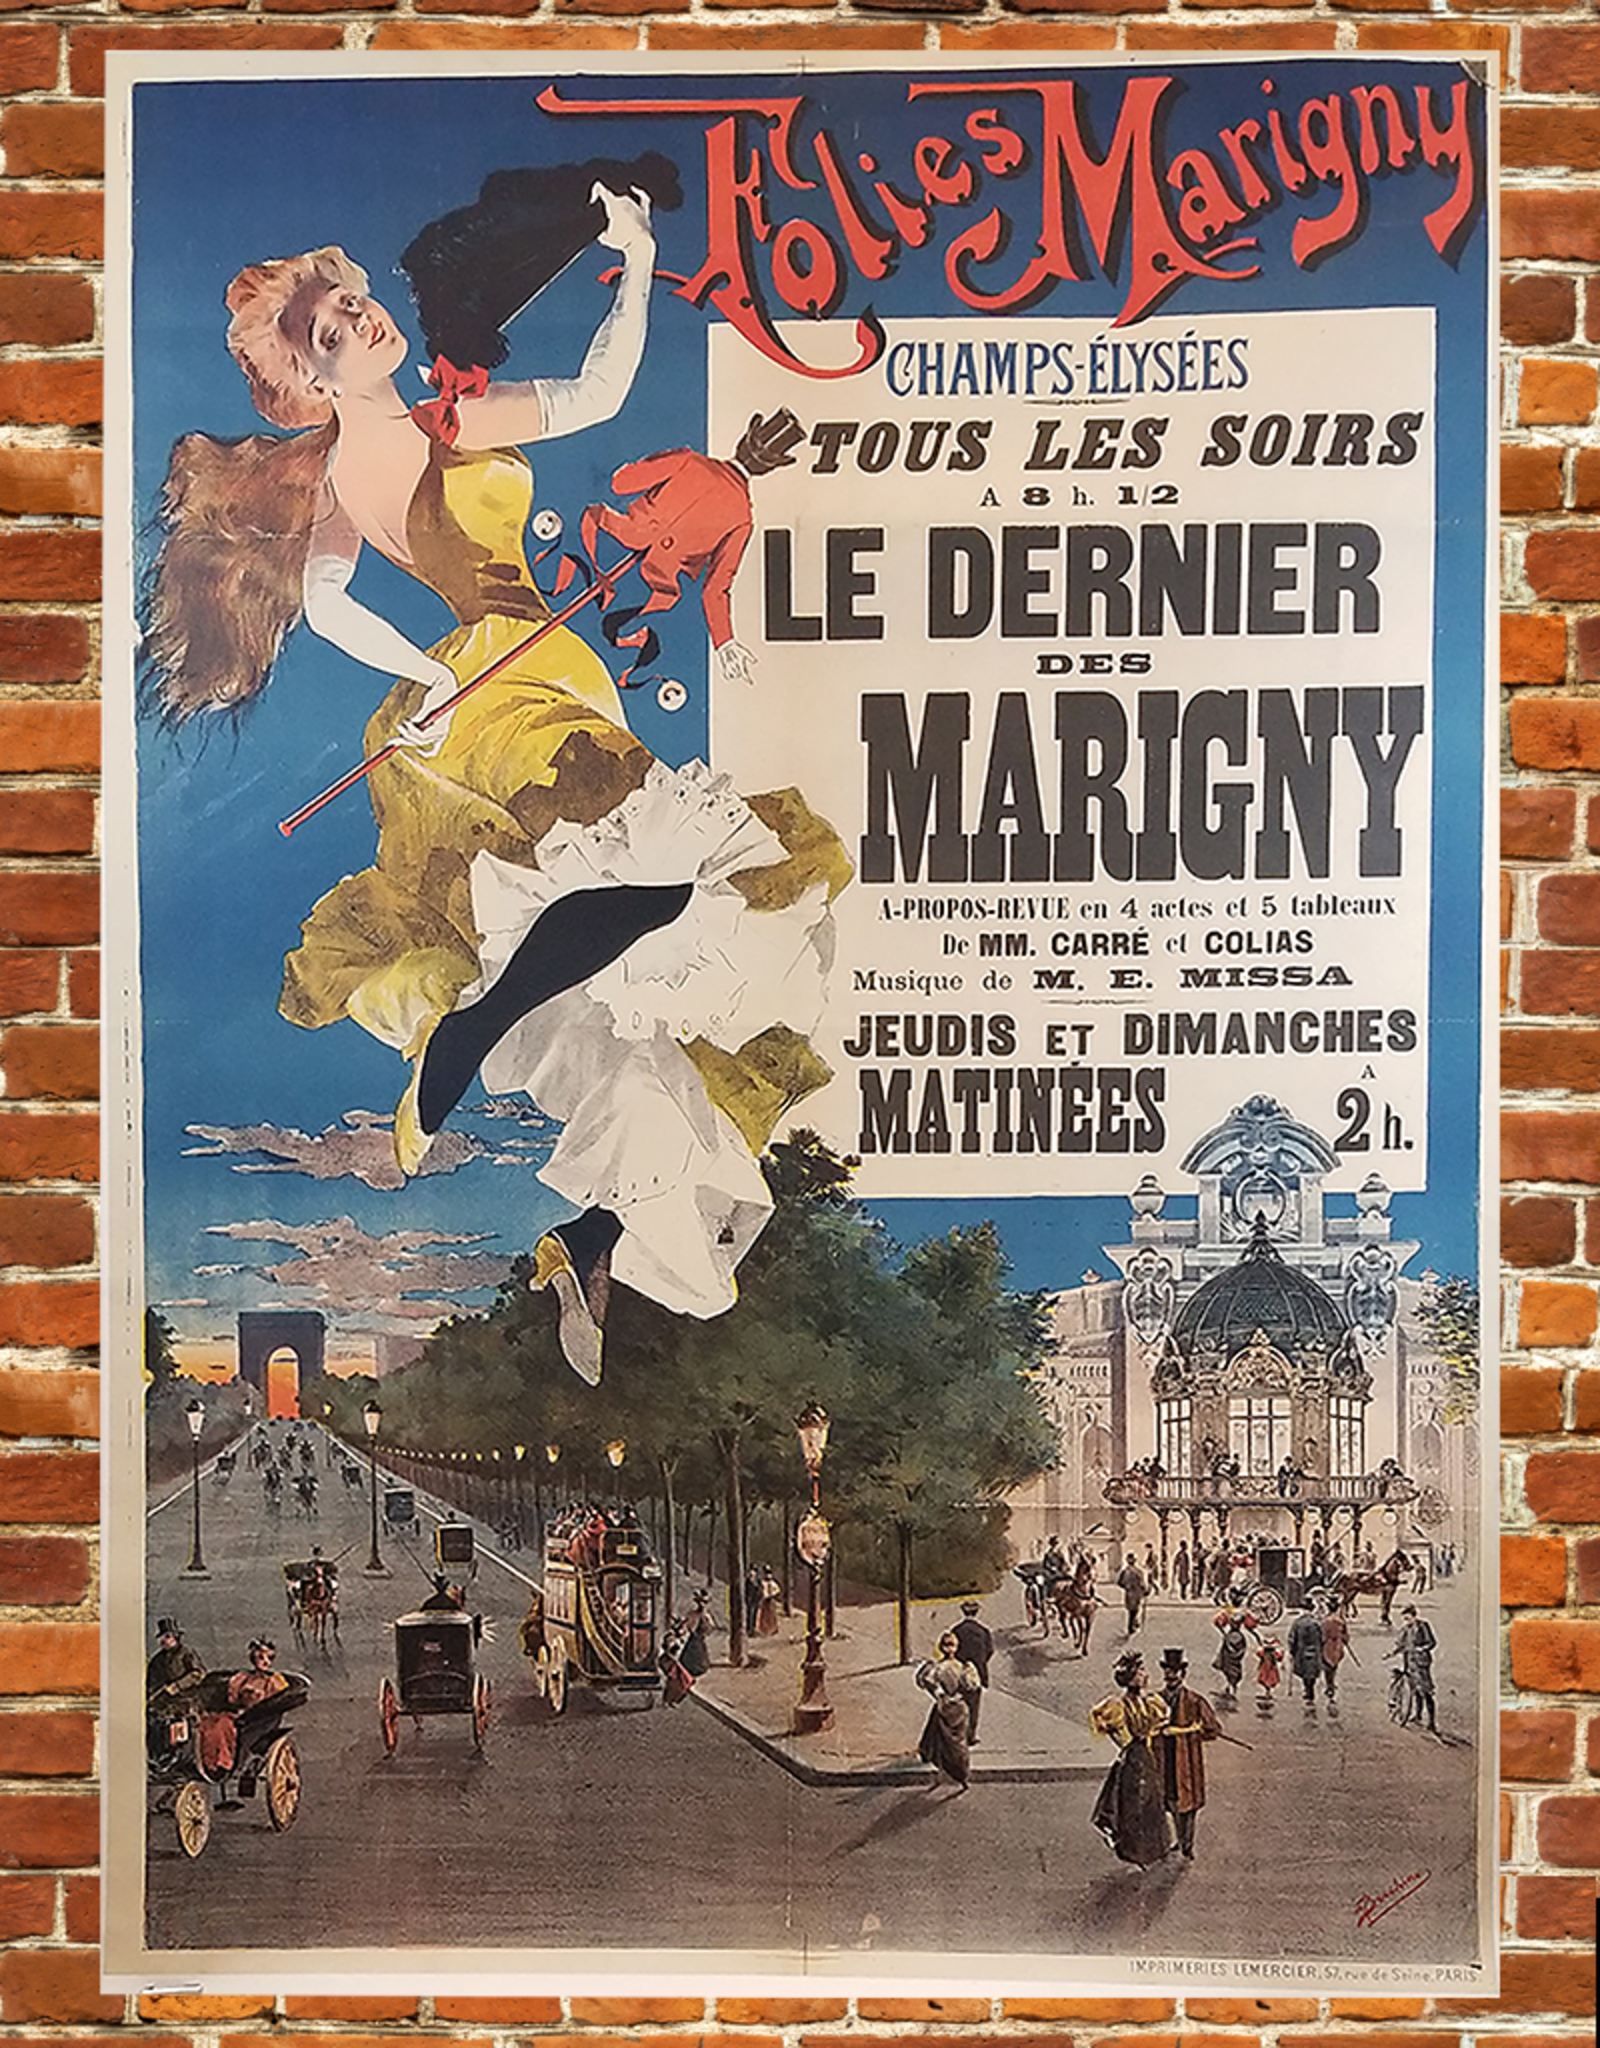 SPV Folies Marigny Poster